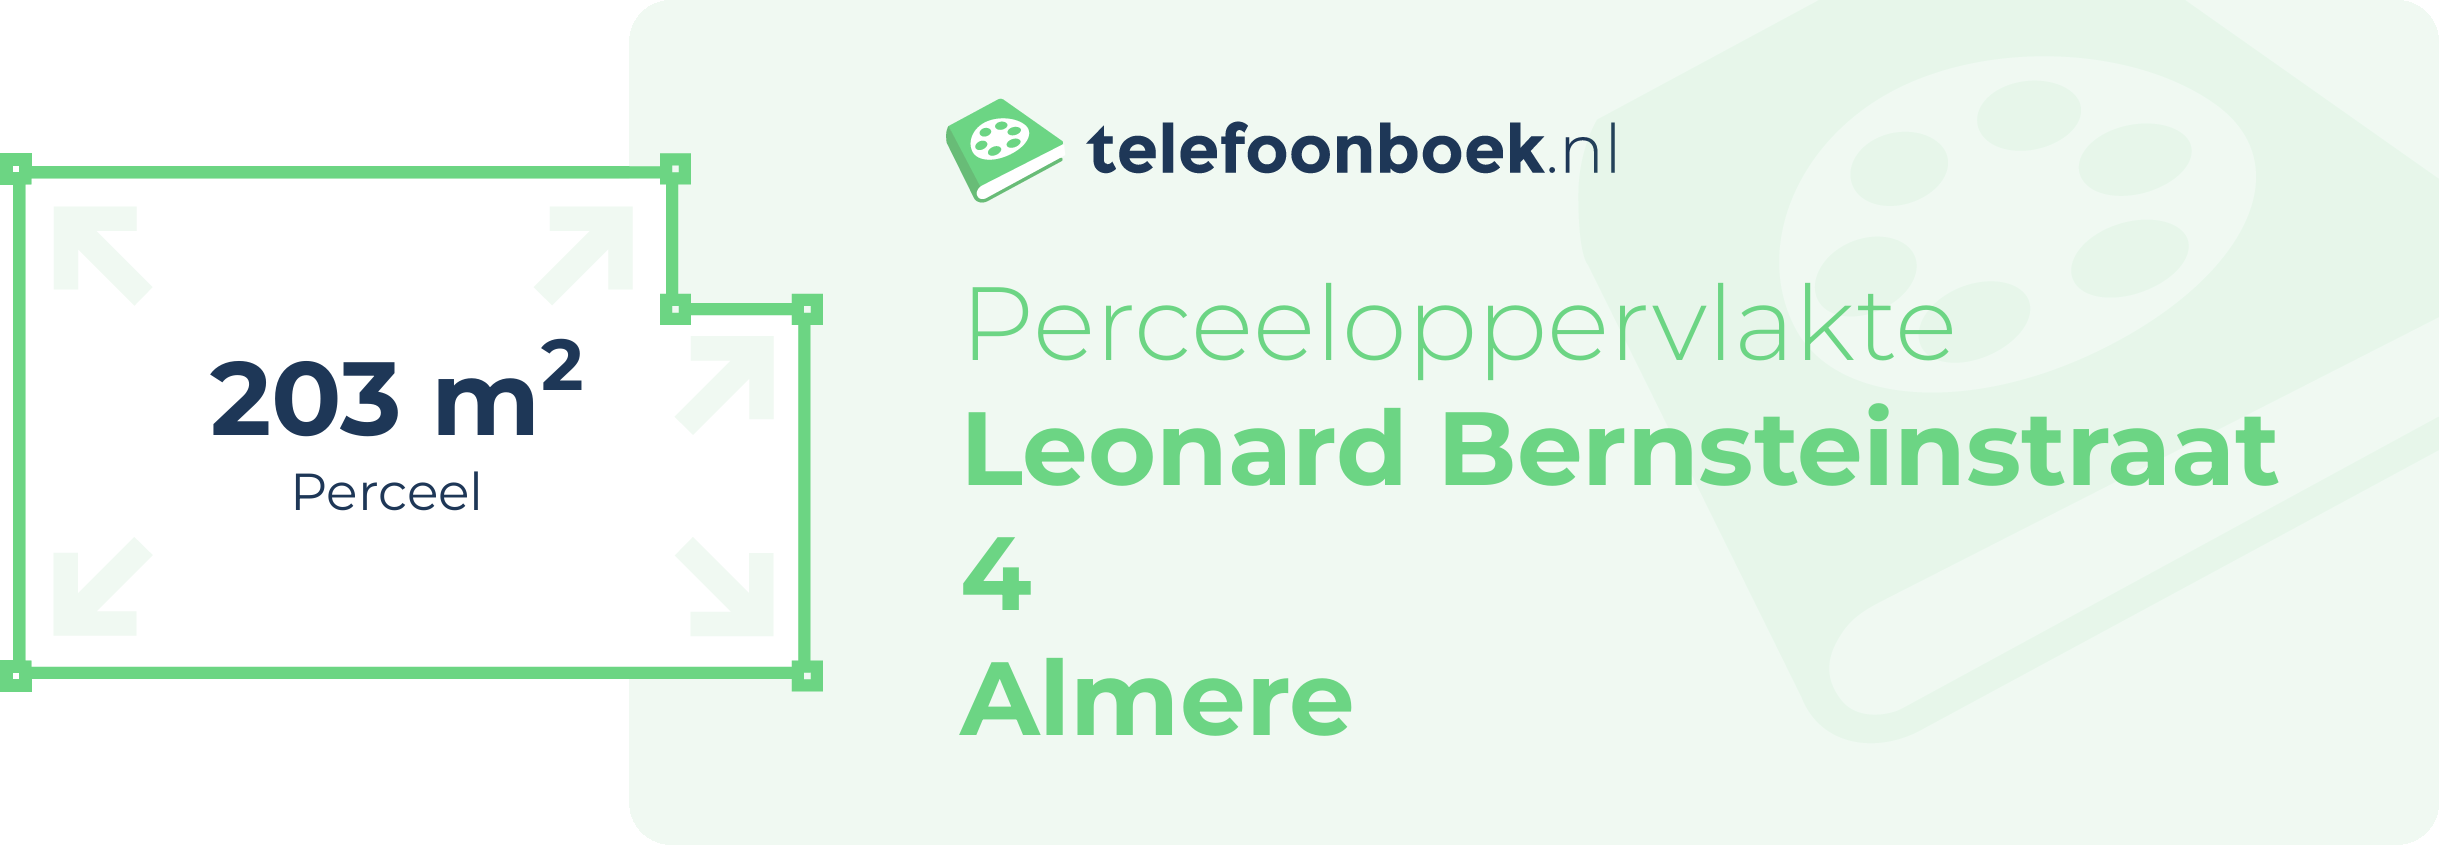 Perceeloppervlakte Leonard Bernsteinstraat 4 Almere